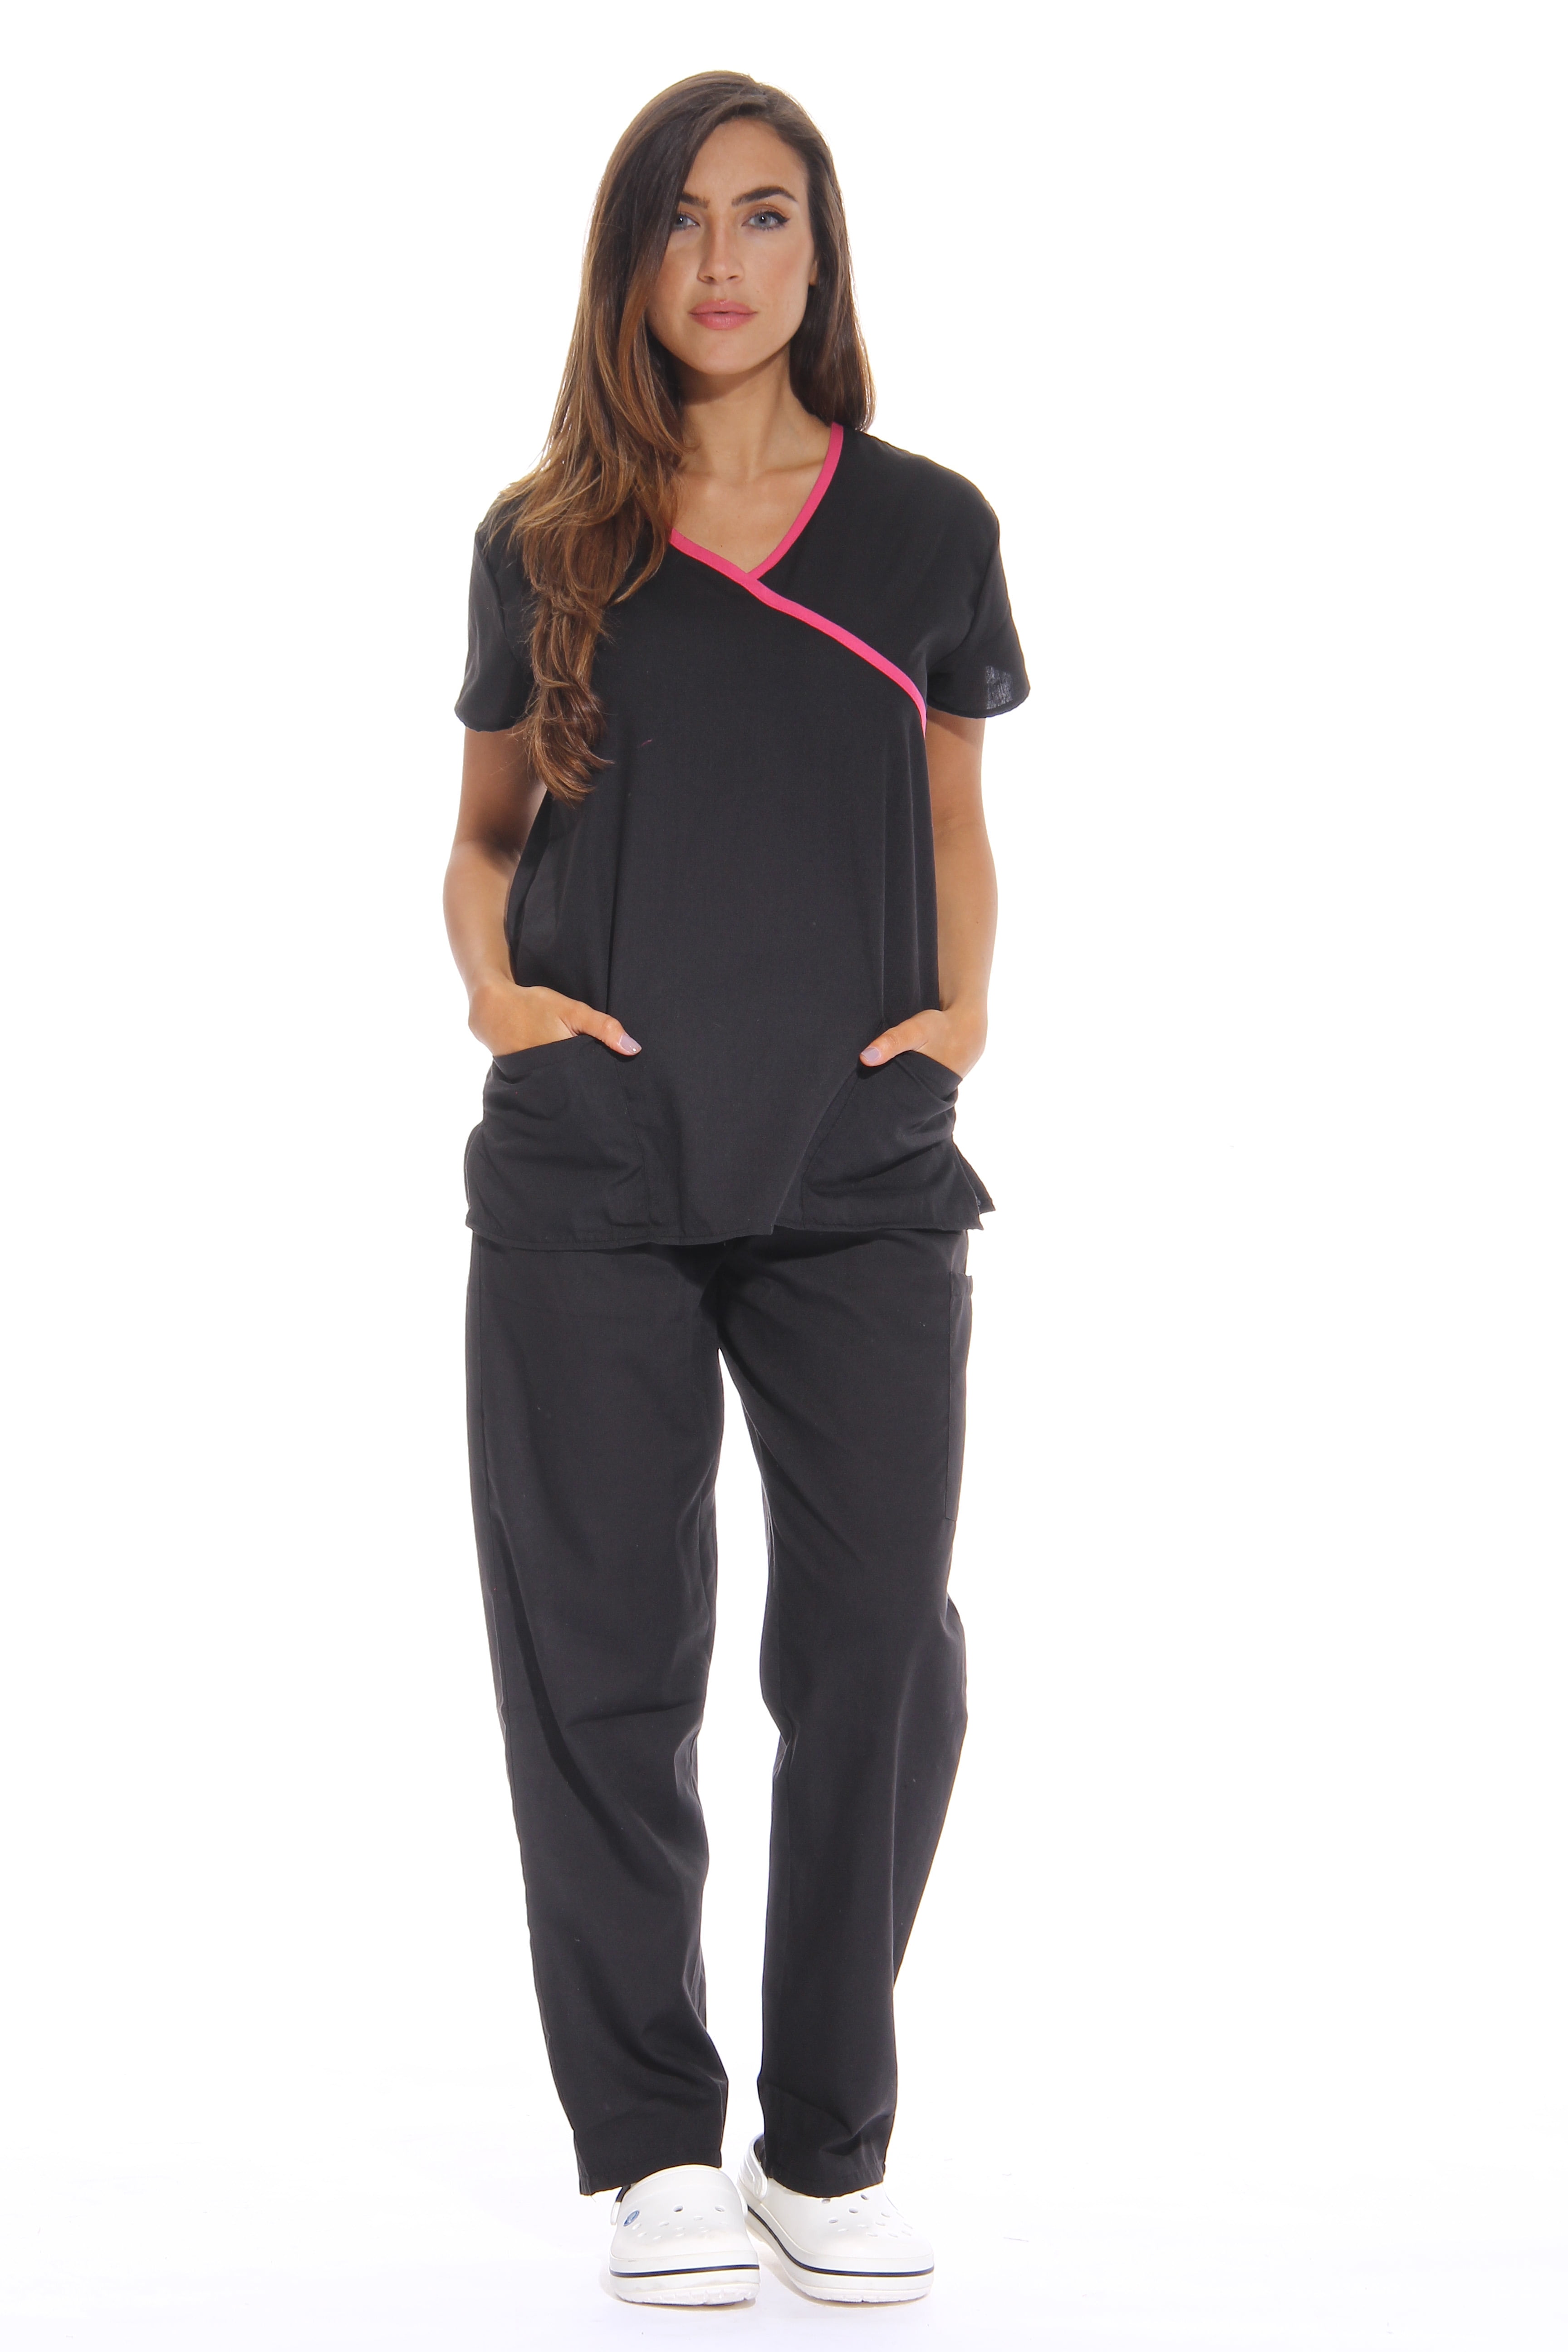 Women's Fashion Medical Nursing Scrub Tops Pink Base Black Gray Pink Hearts 2XL 